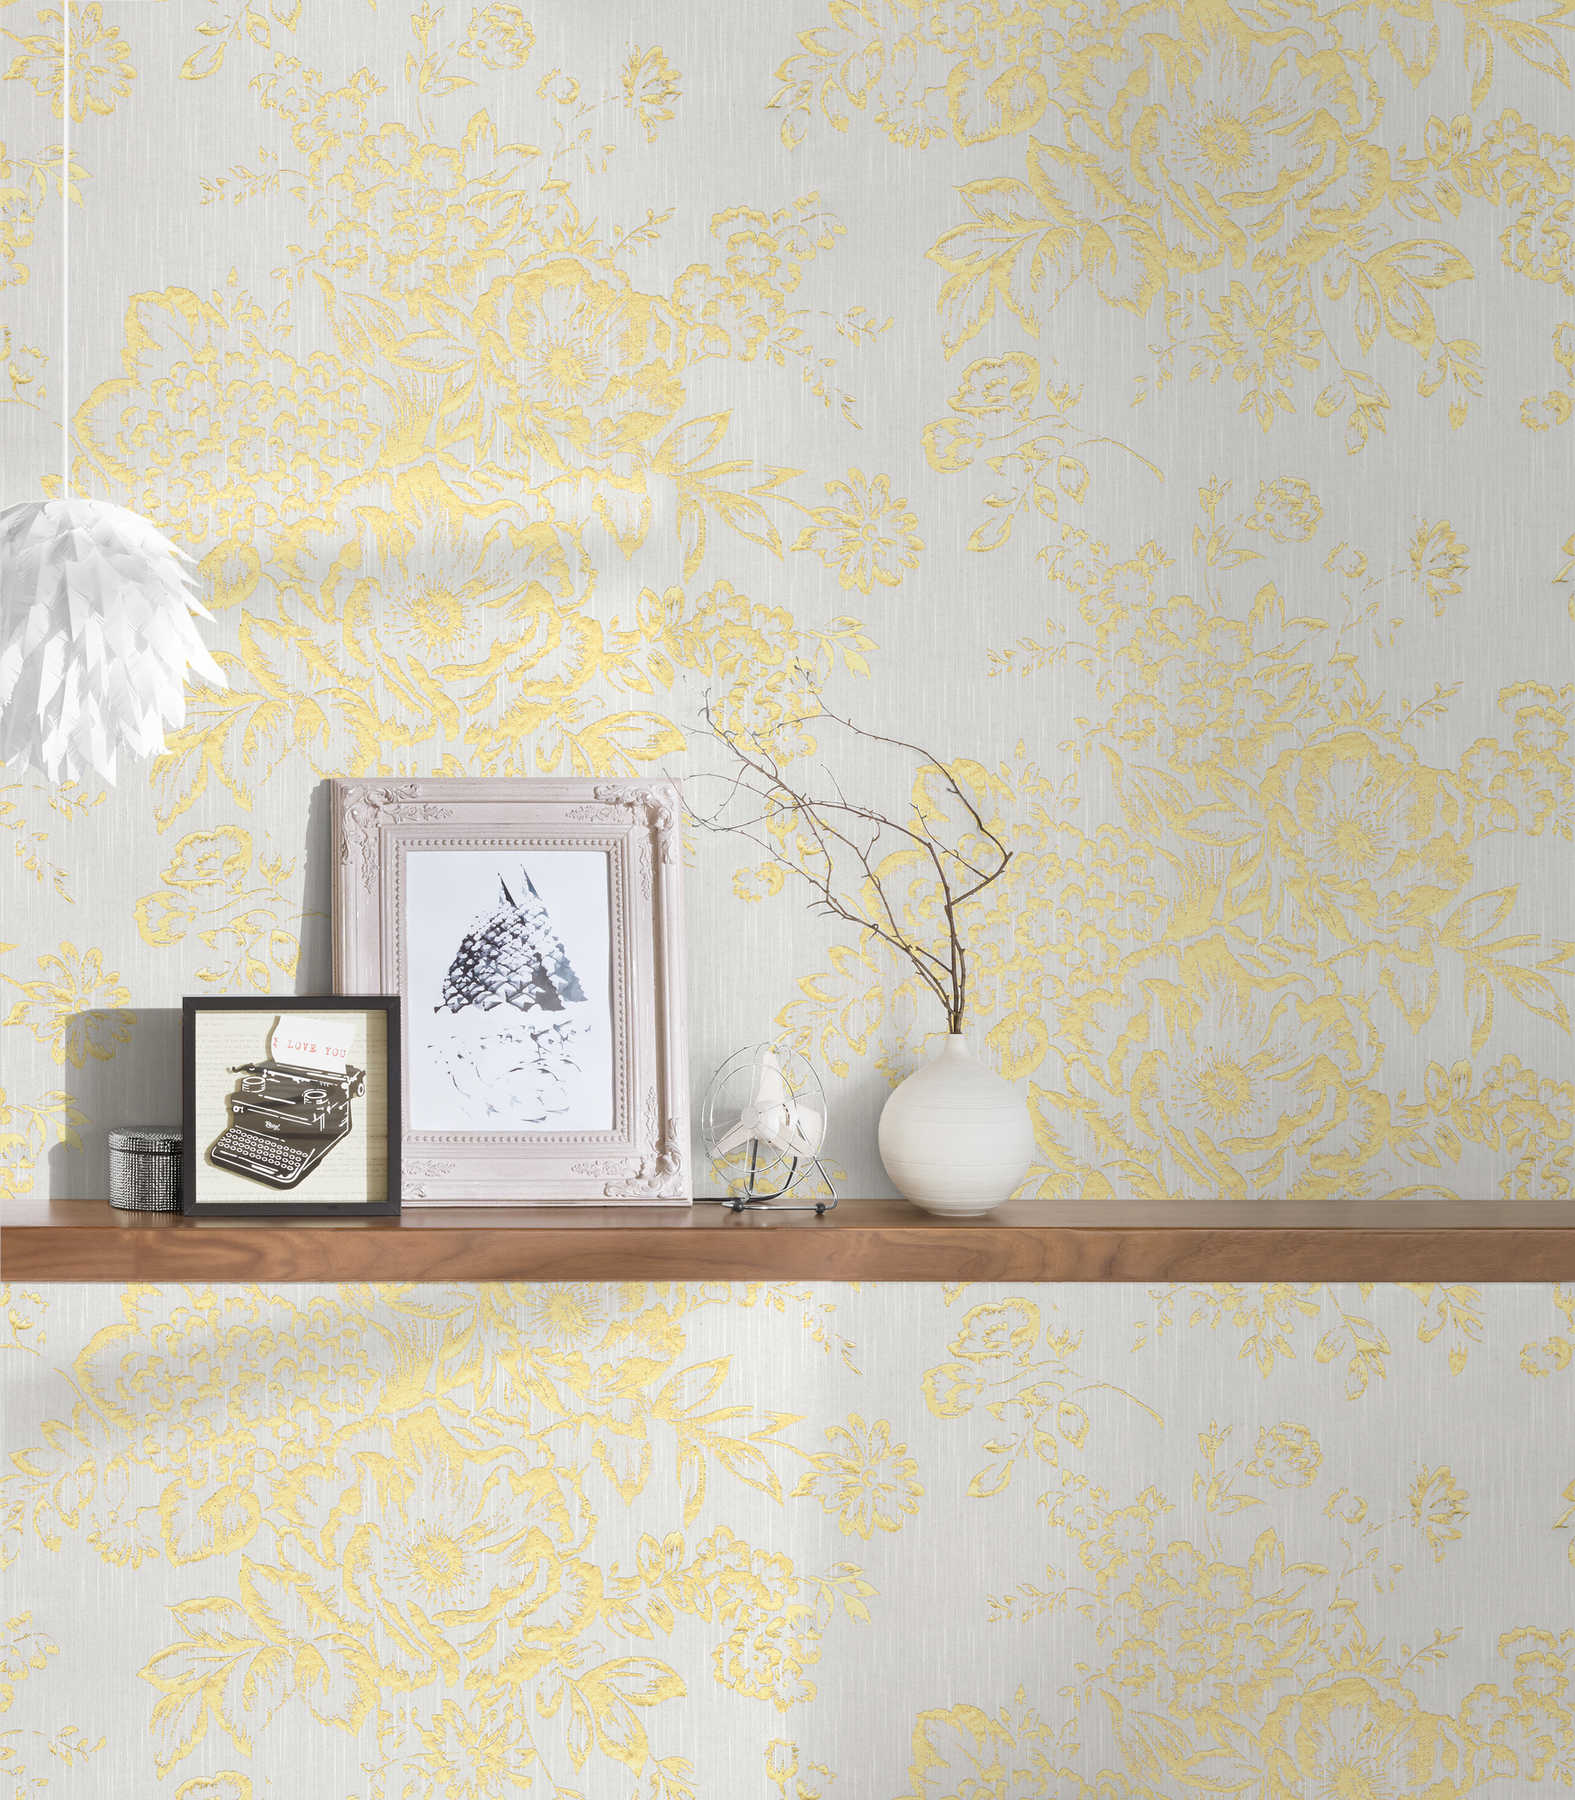             Papel pintado texturizado con motivos florales dorados - oro, blanco
        